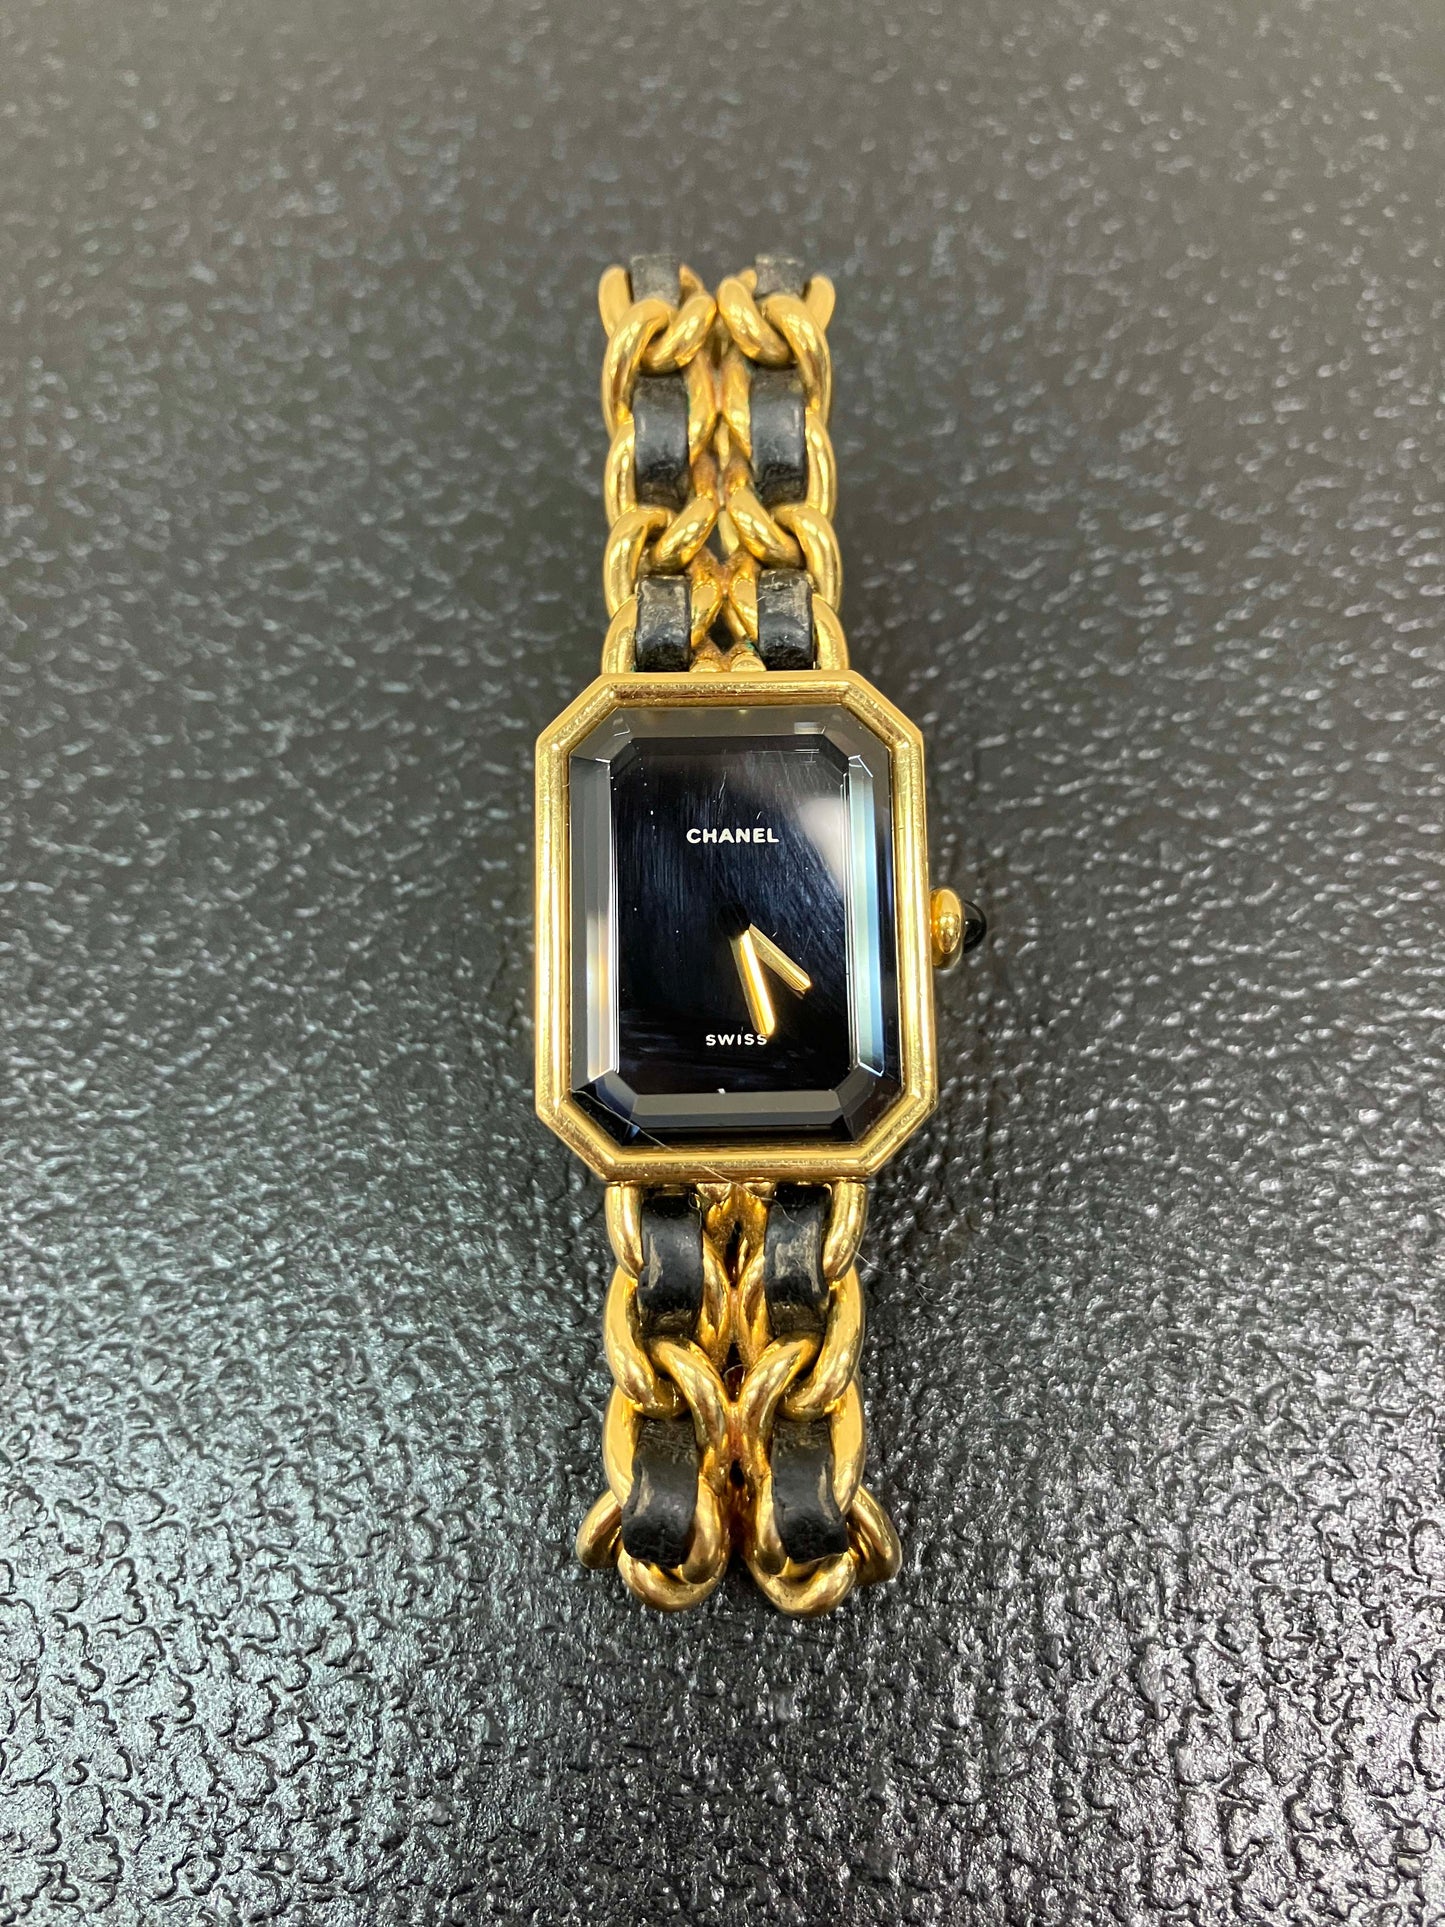 Chanel Premiere S size Wrist Watch – Sonata Vintage